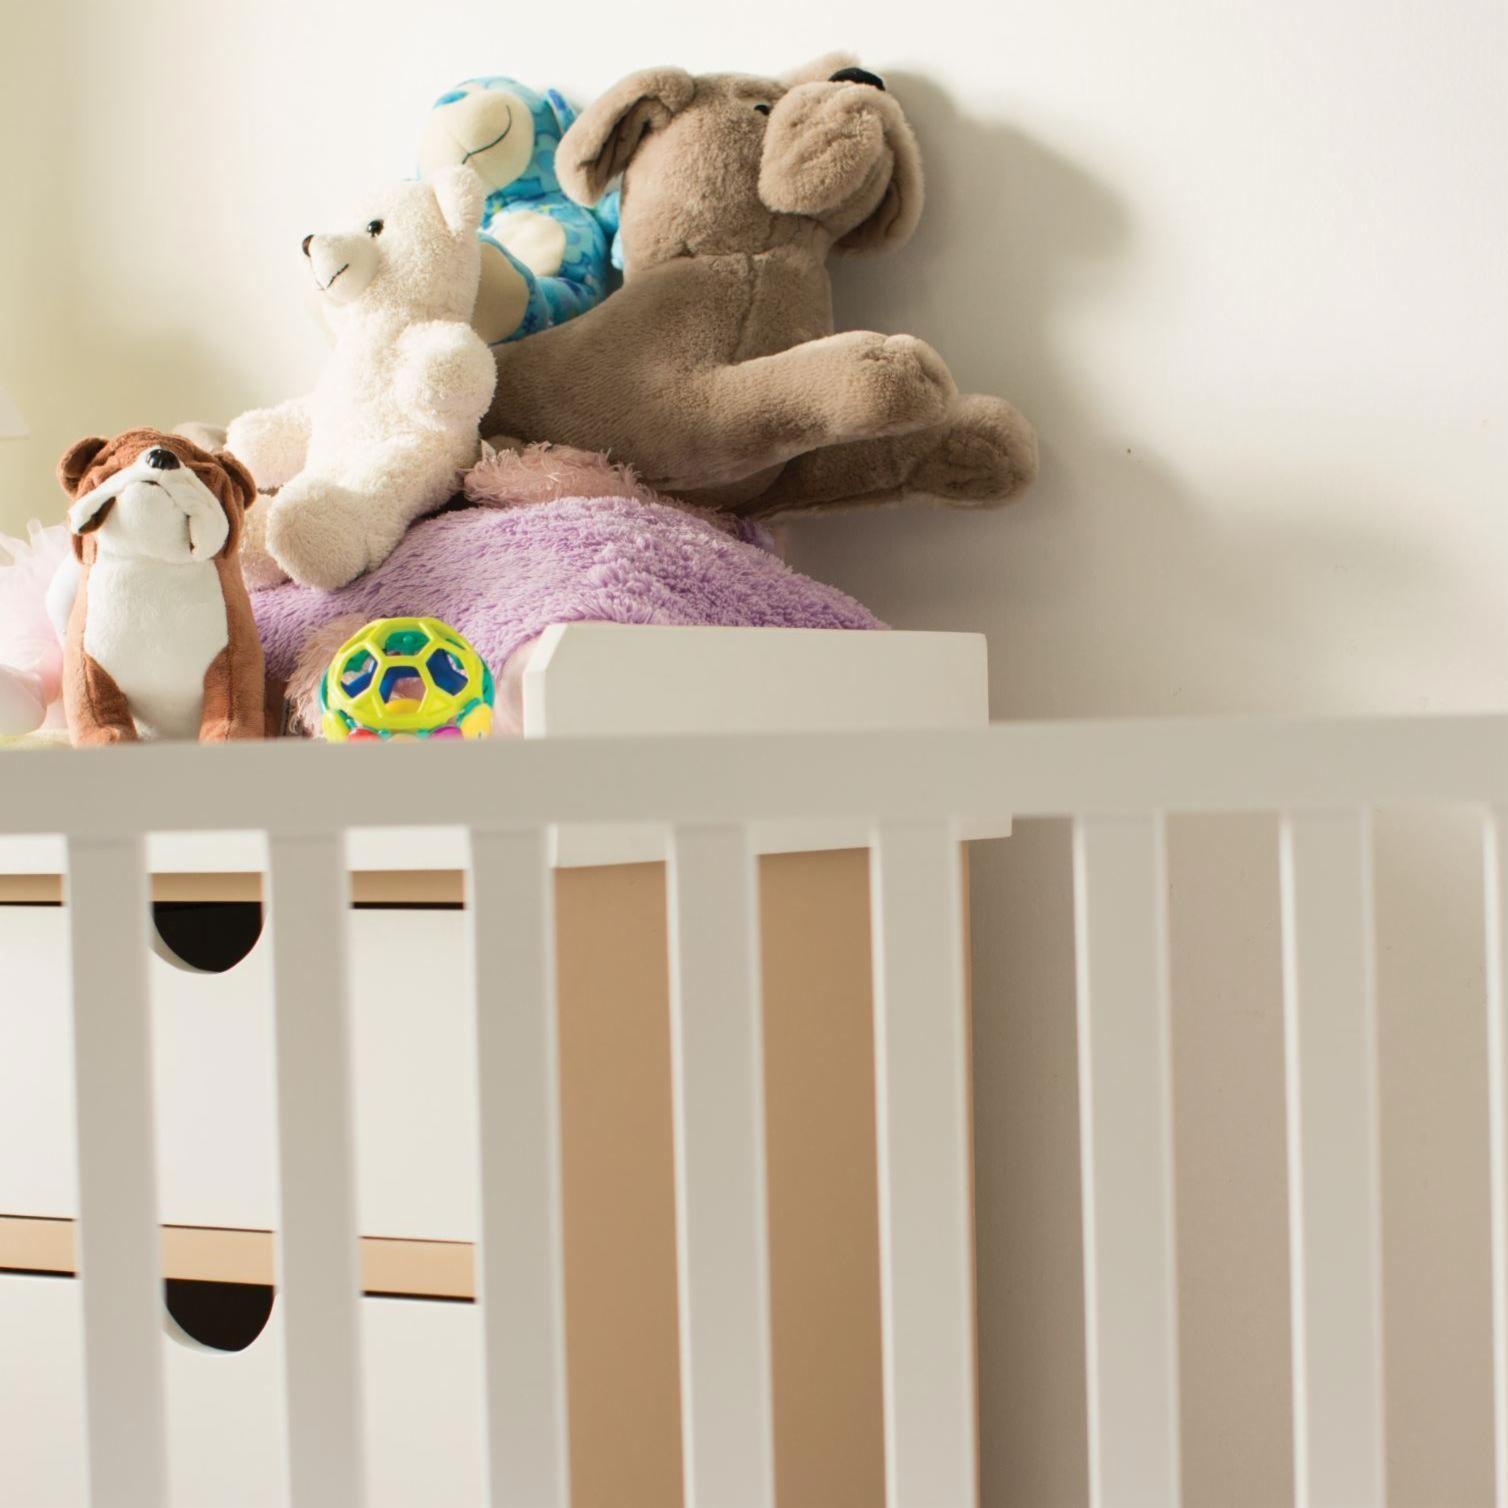 SAFE SLEEP: Setting Up Your Baby’s Crib